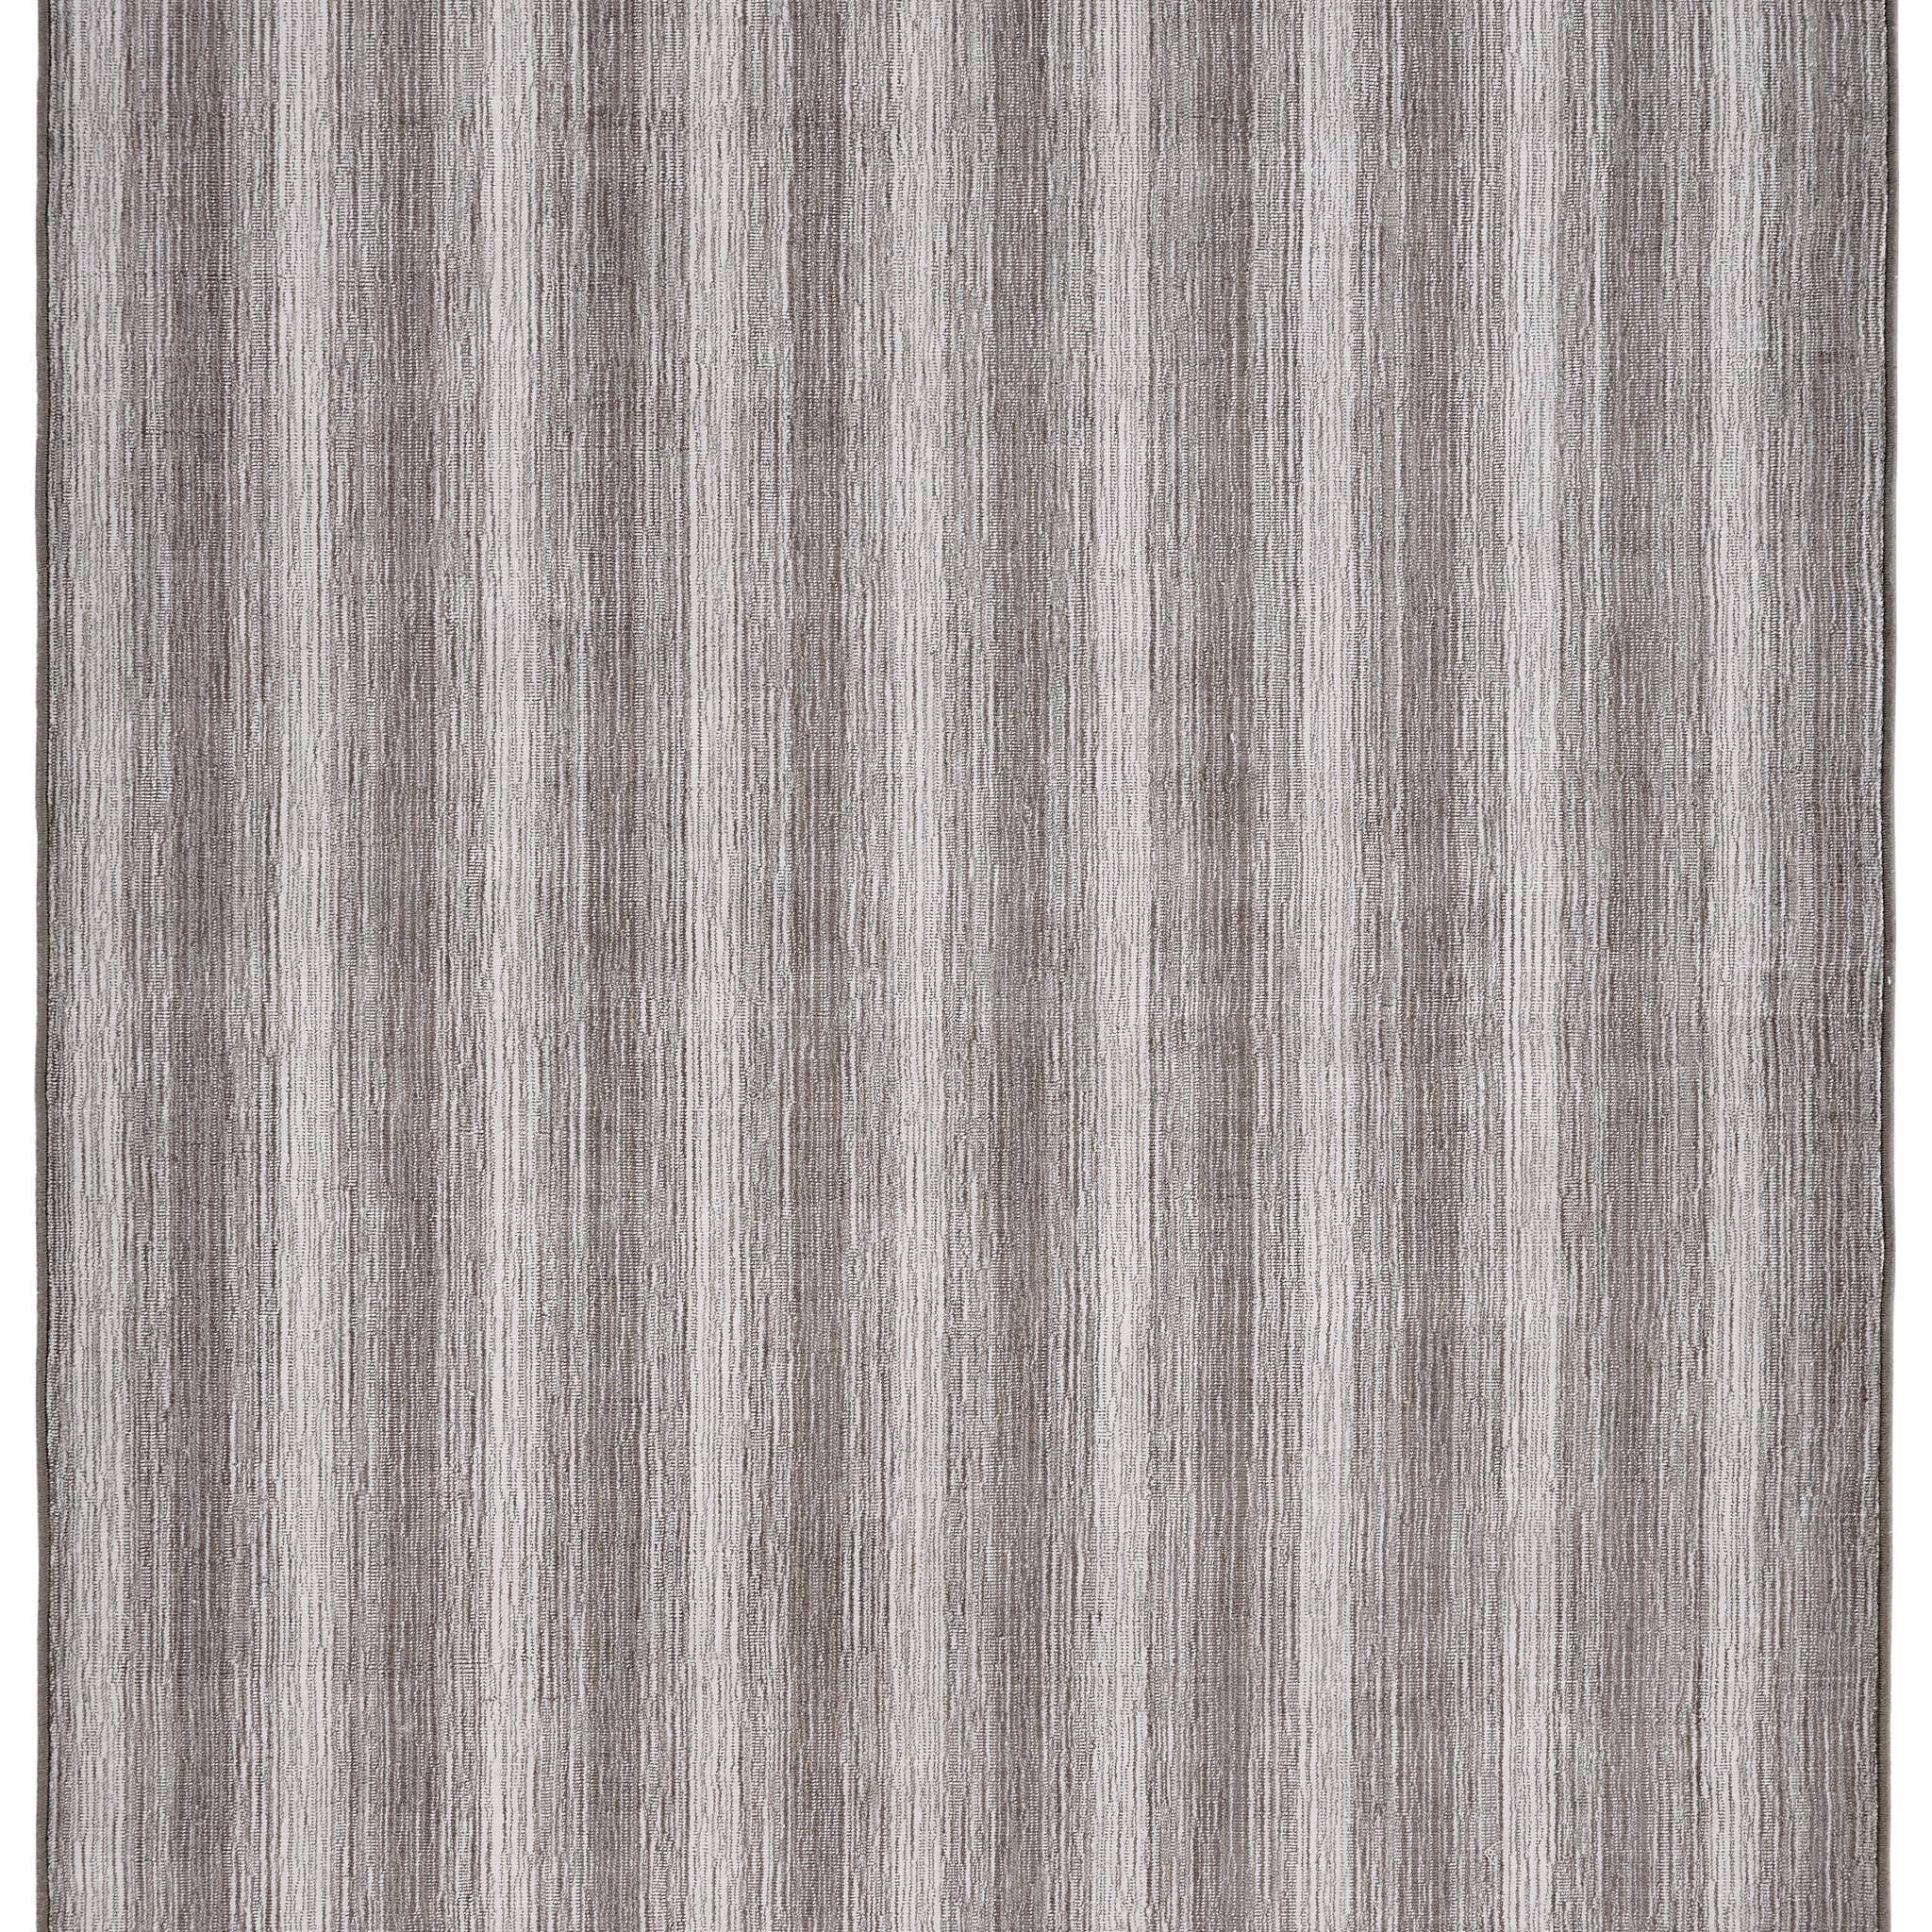 Vonte Hand-Loomed Carpet, Coffee Default Title